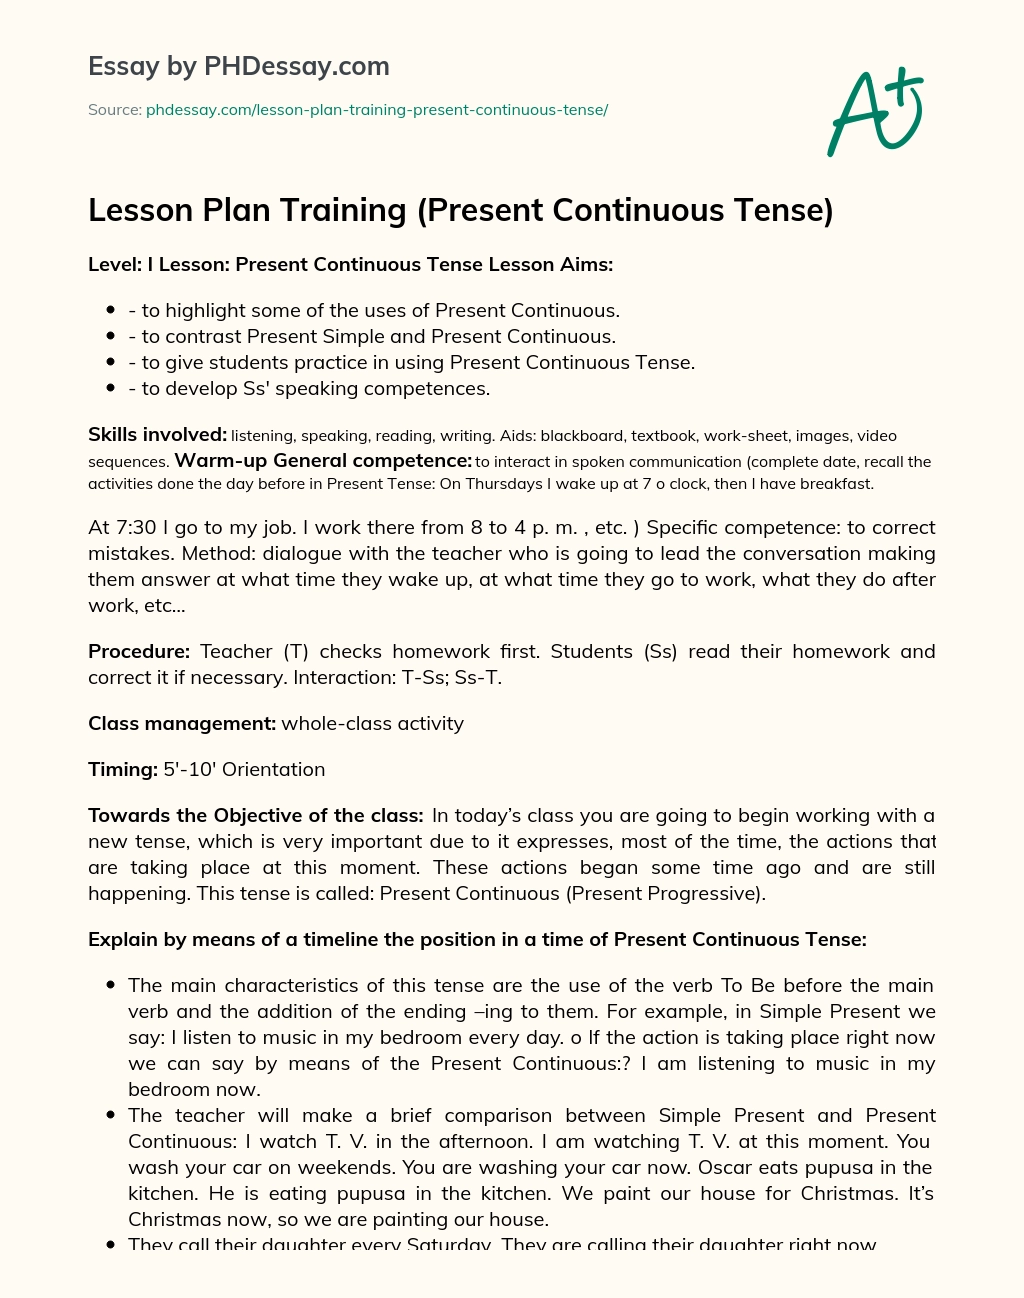 Lesson Plan Training (Present Continuous Tense) essay